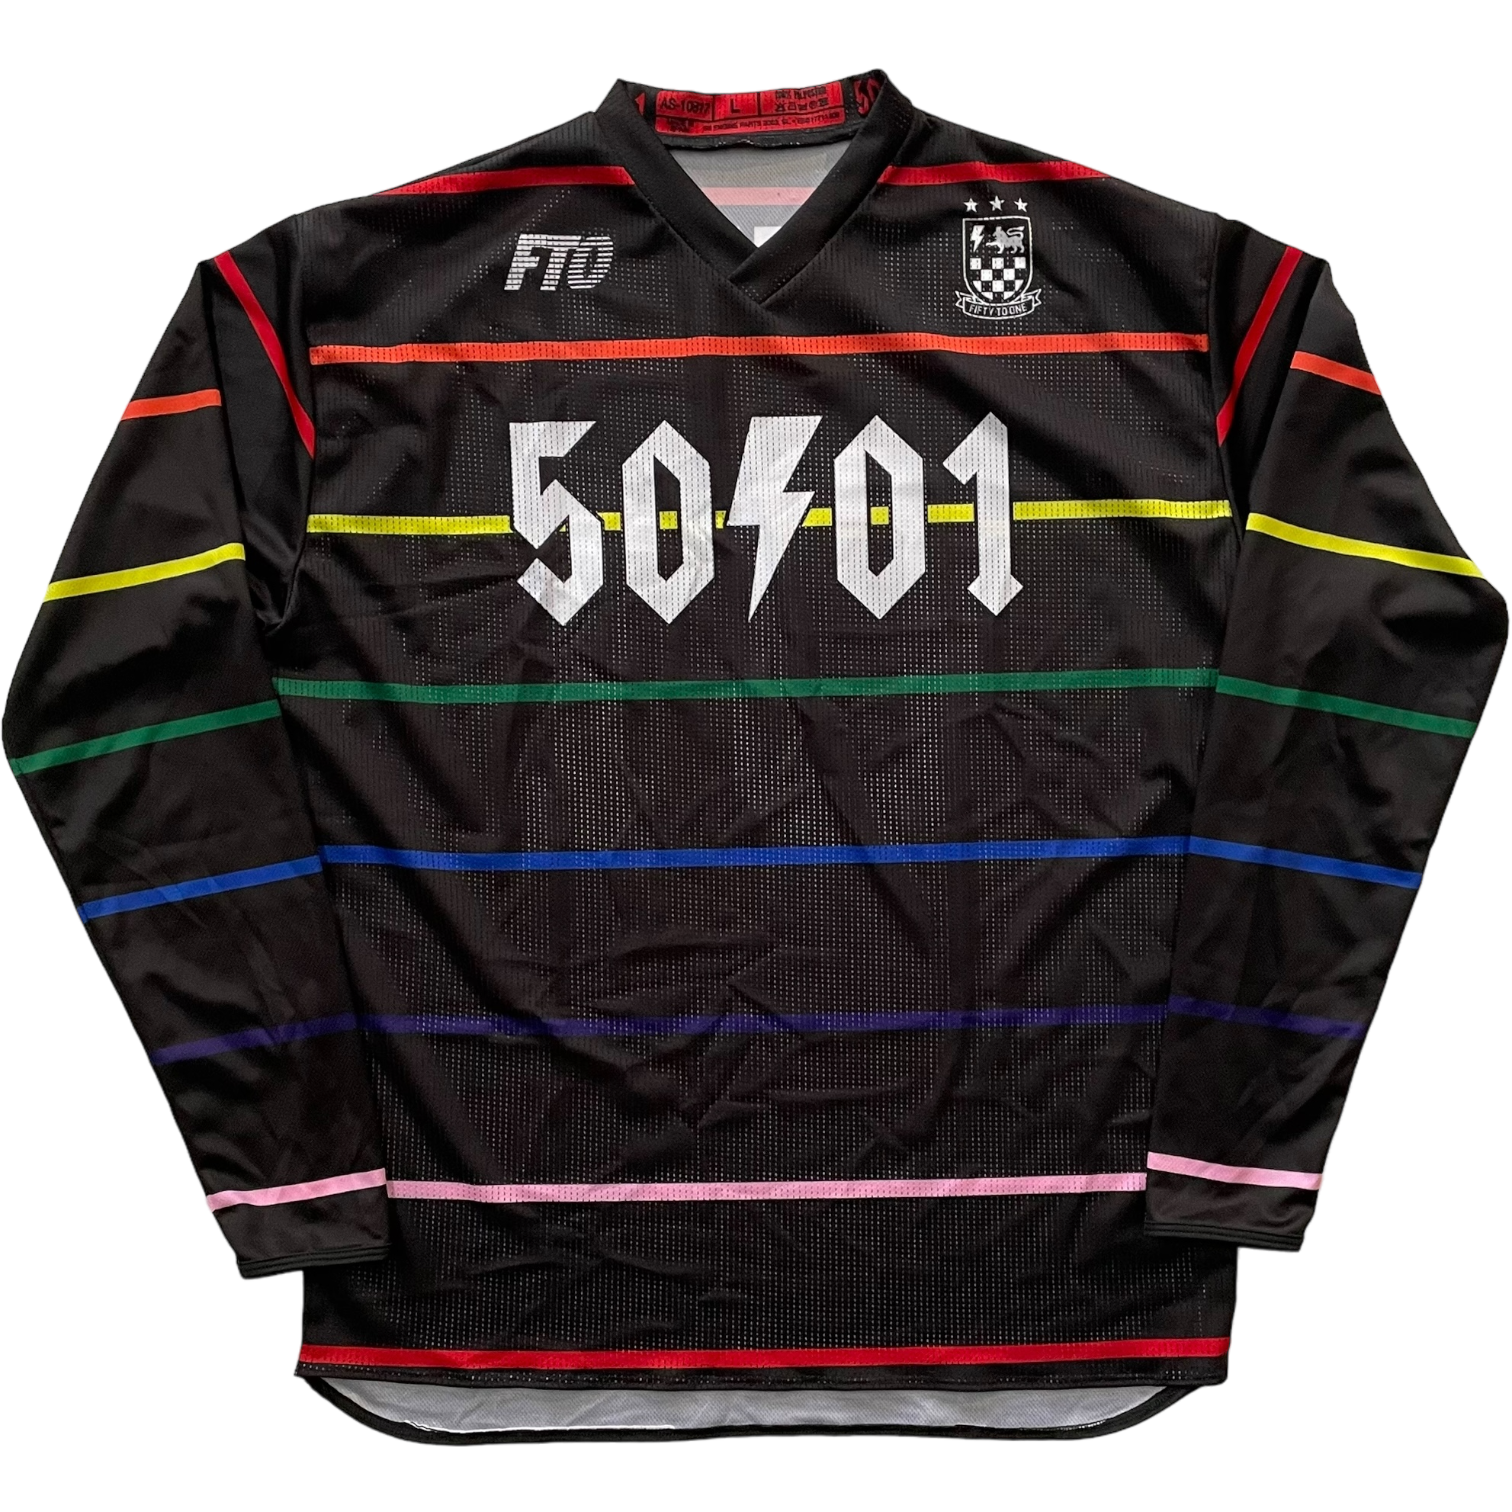 50to01 - FIFTY FC MTB LONGSLEEVE JERSEY BLACK